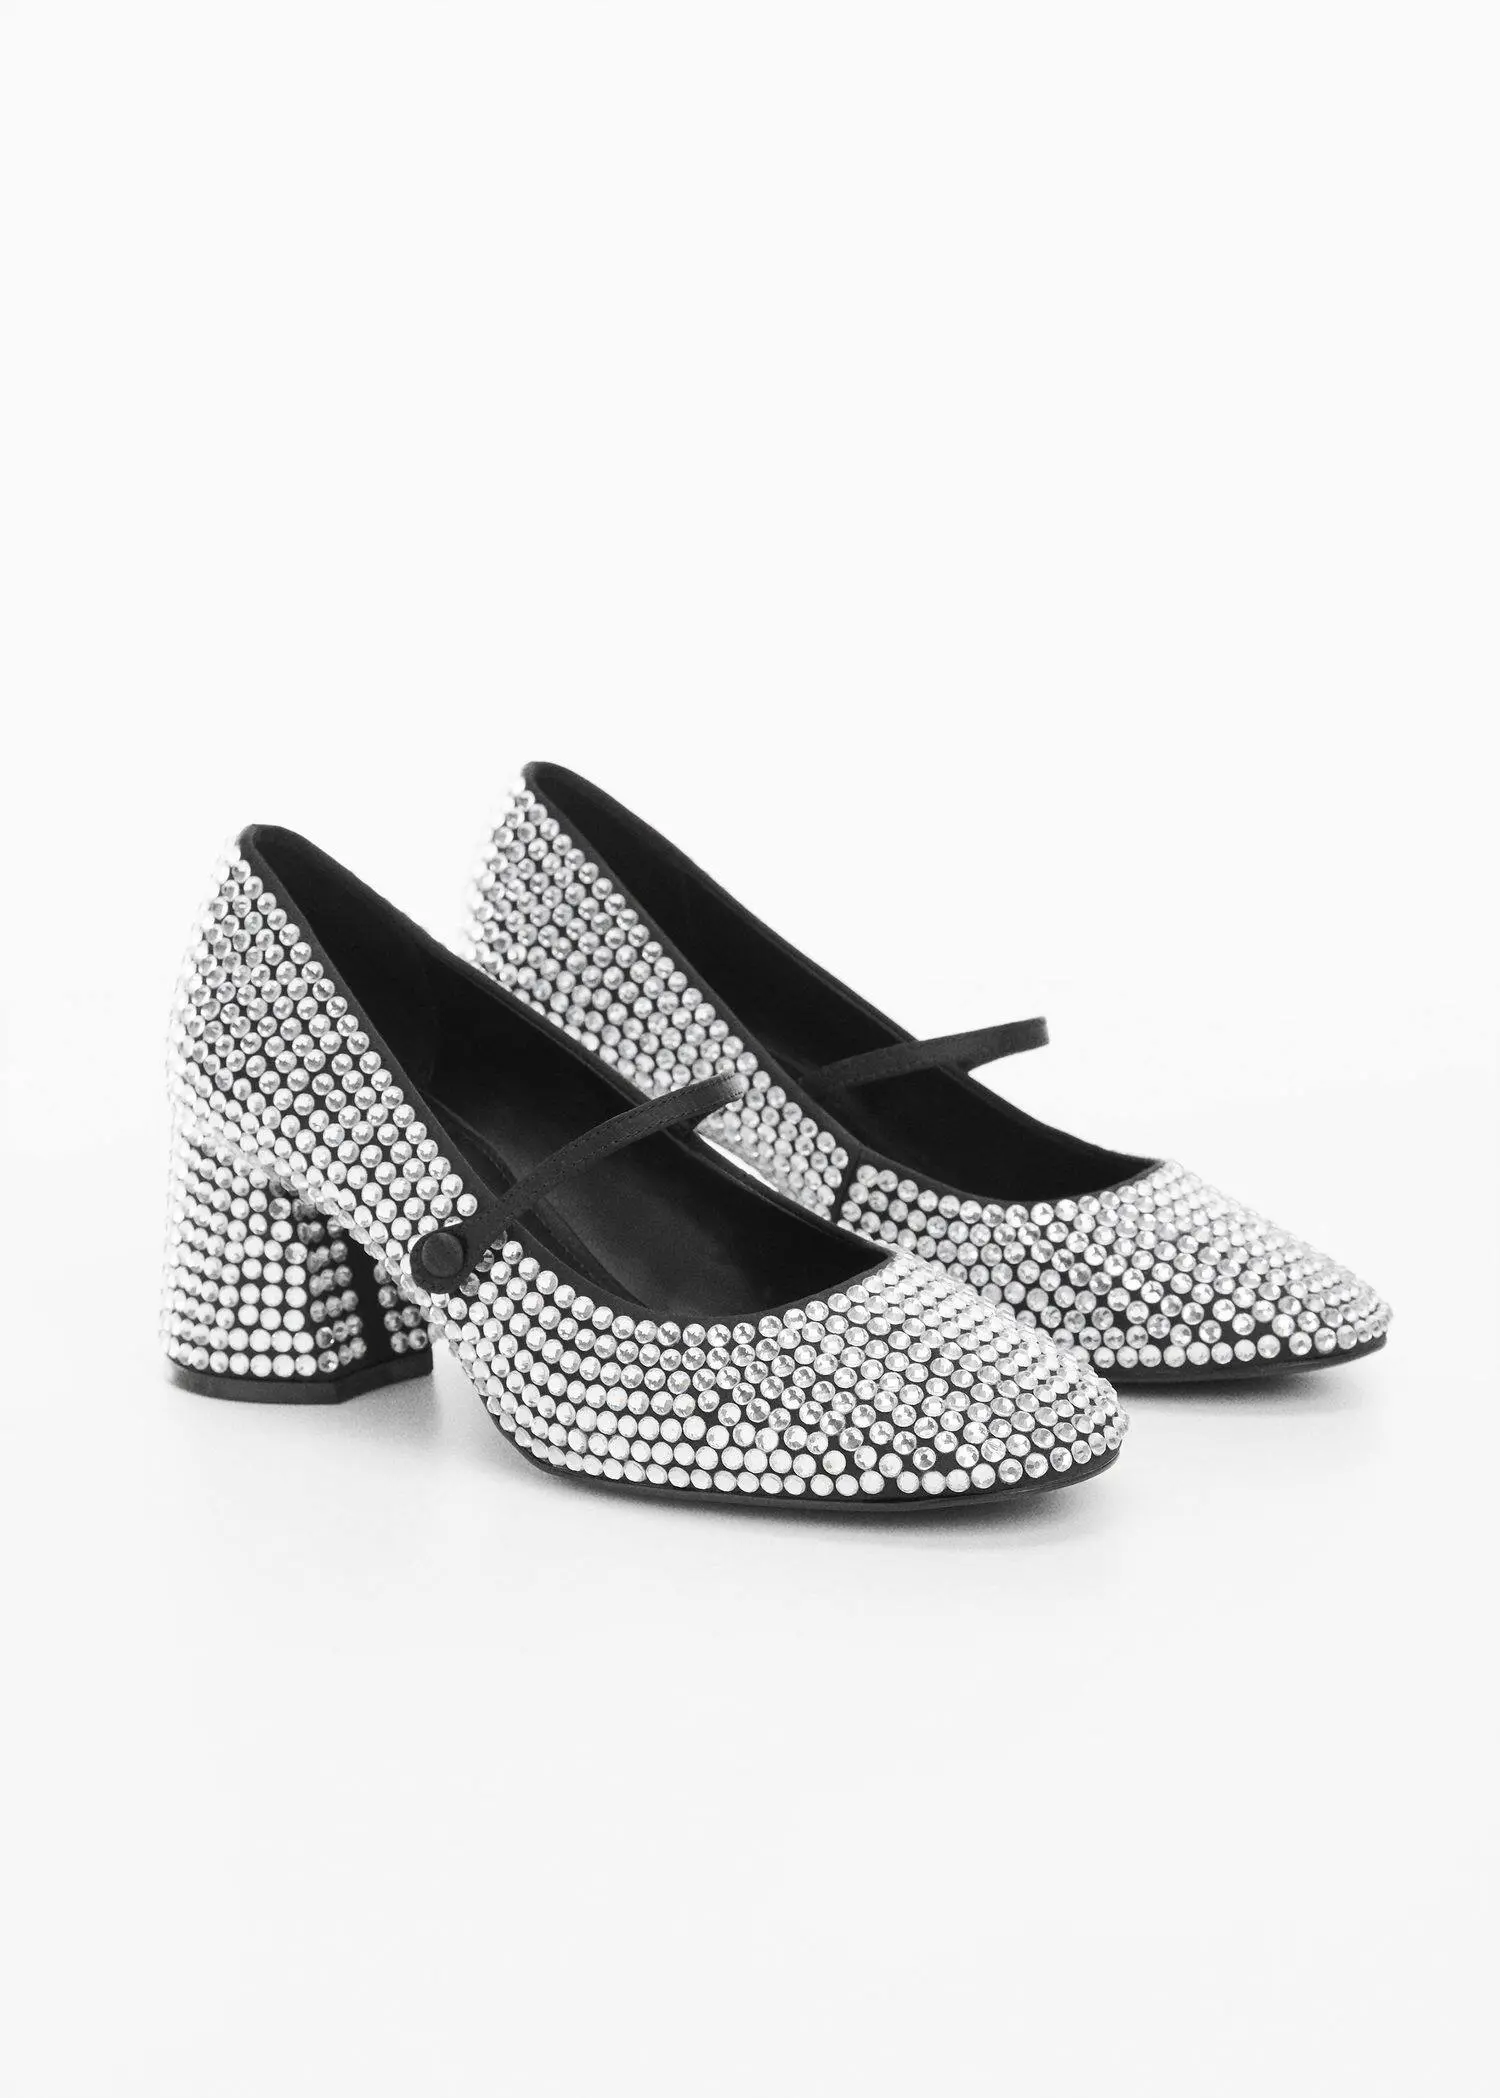 Mango Shoes with shiny heels. 2